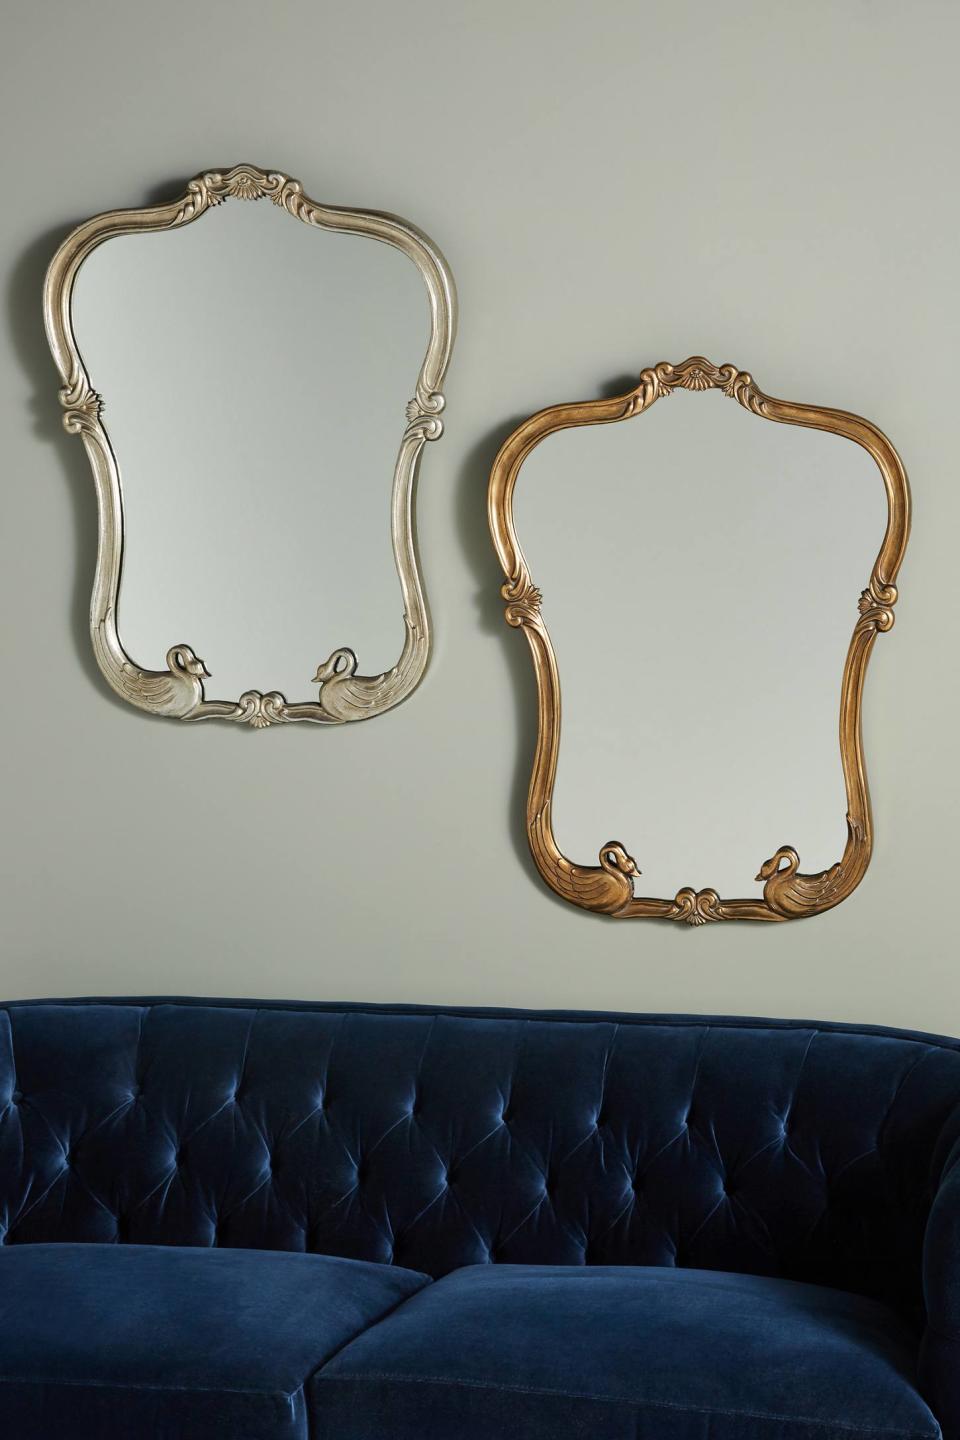 5) Swansong Mirror